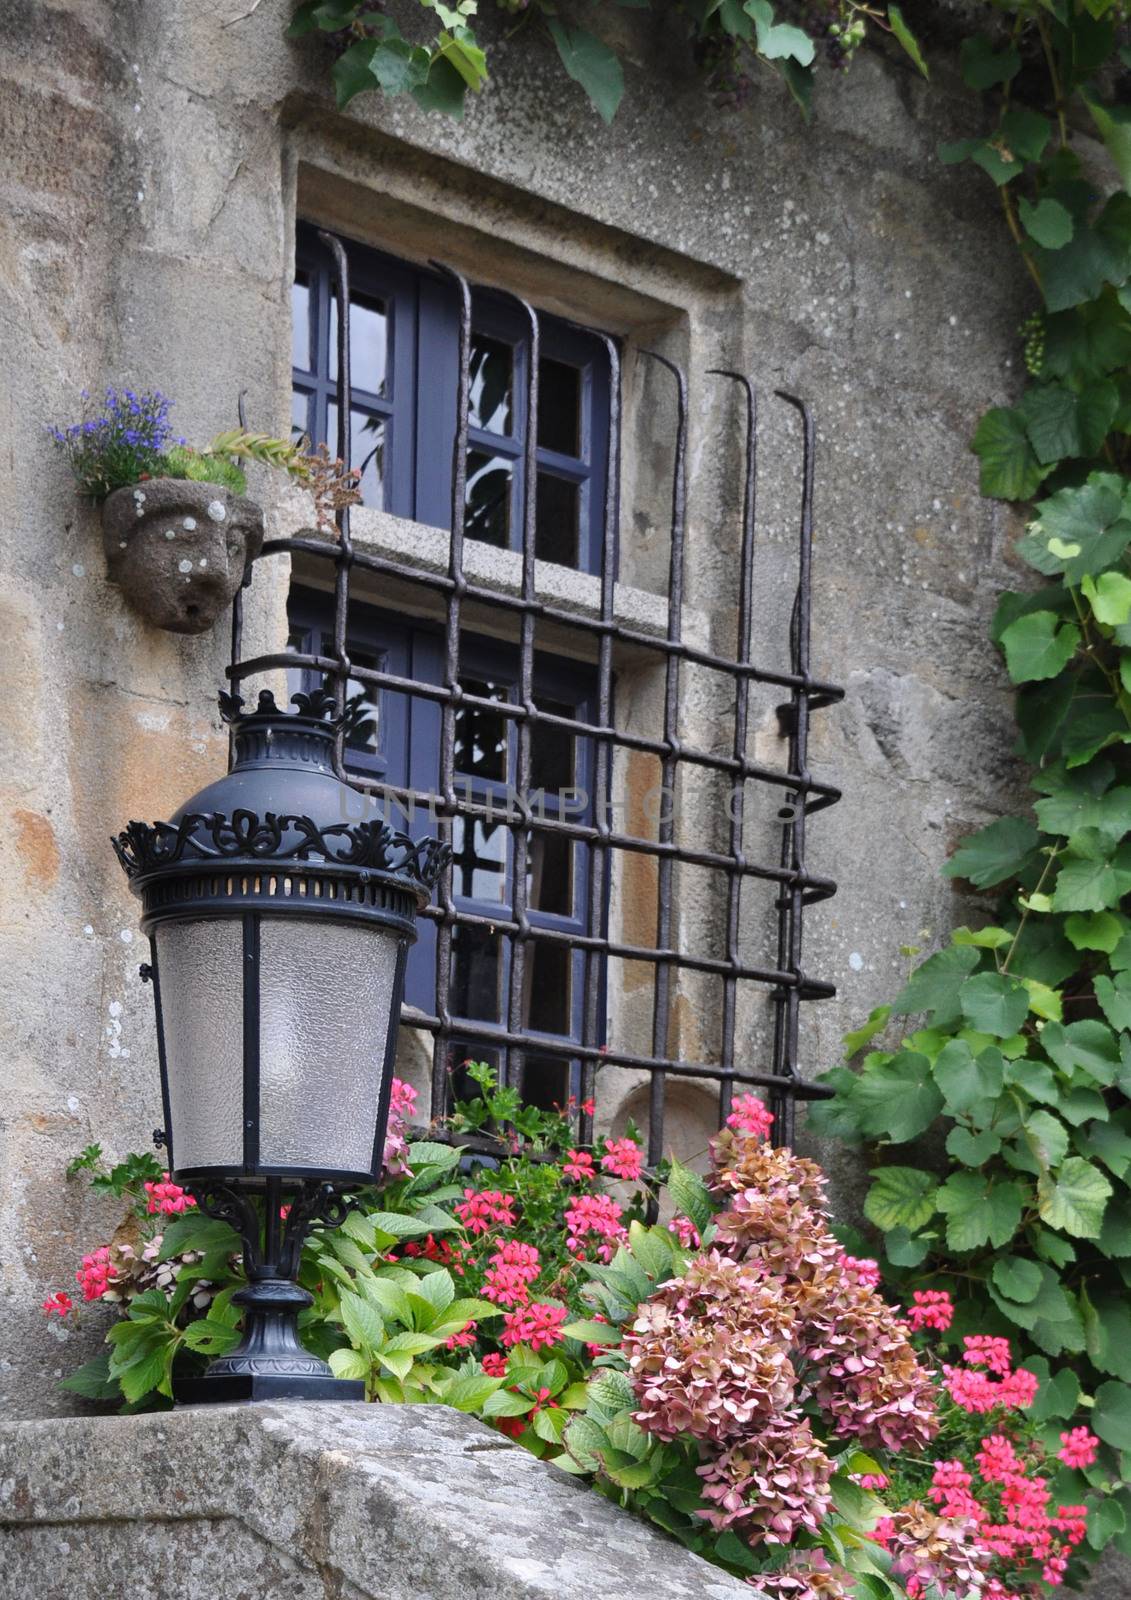 Pretty window in the small medival city of Rochefort-en-Terre, in Brittany France.One of the Plus beaux village de France